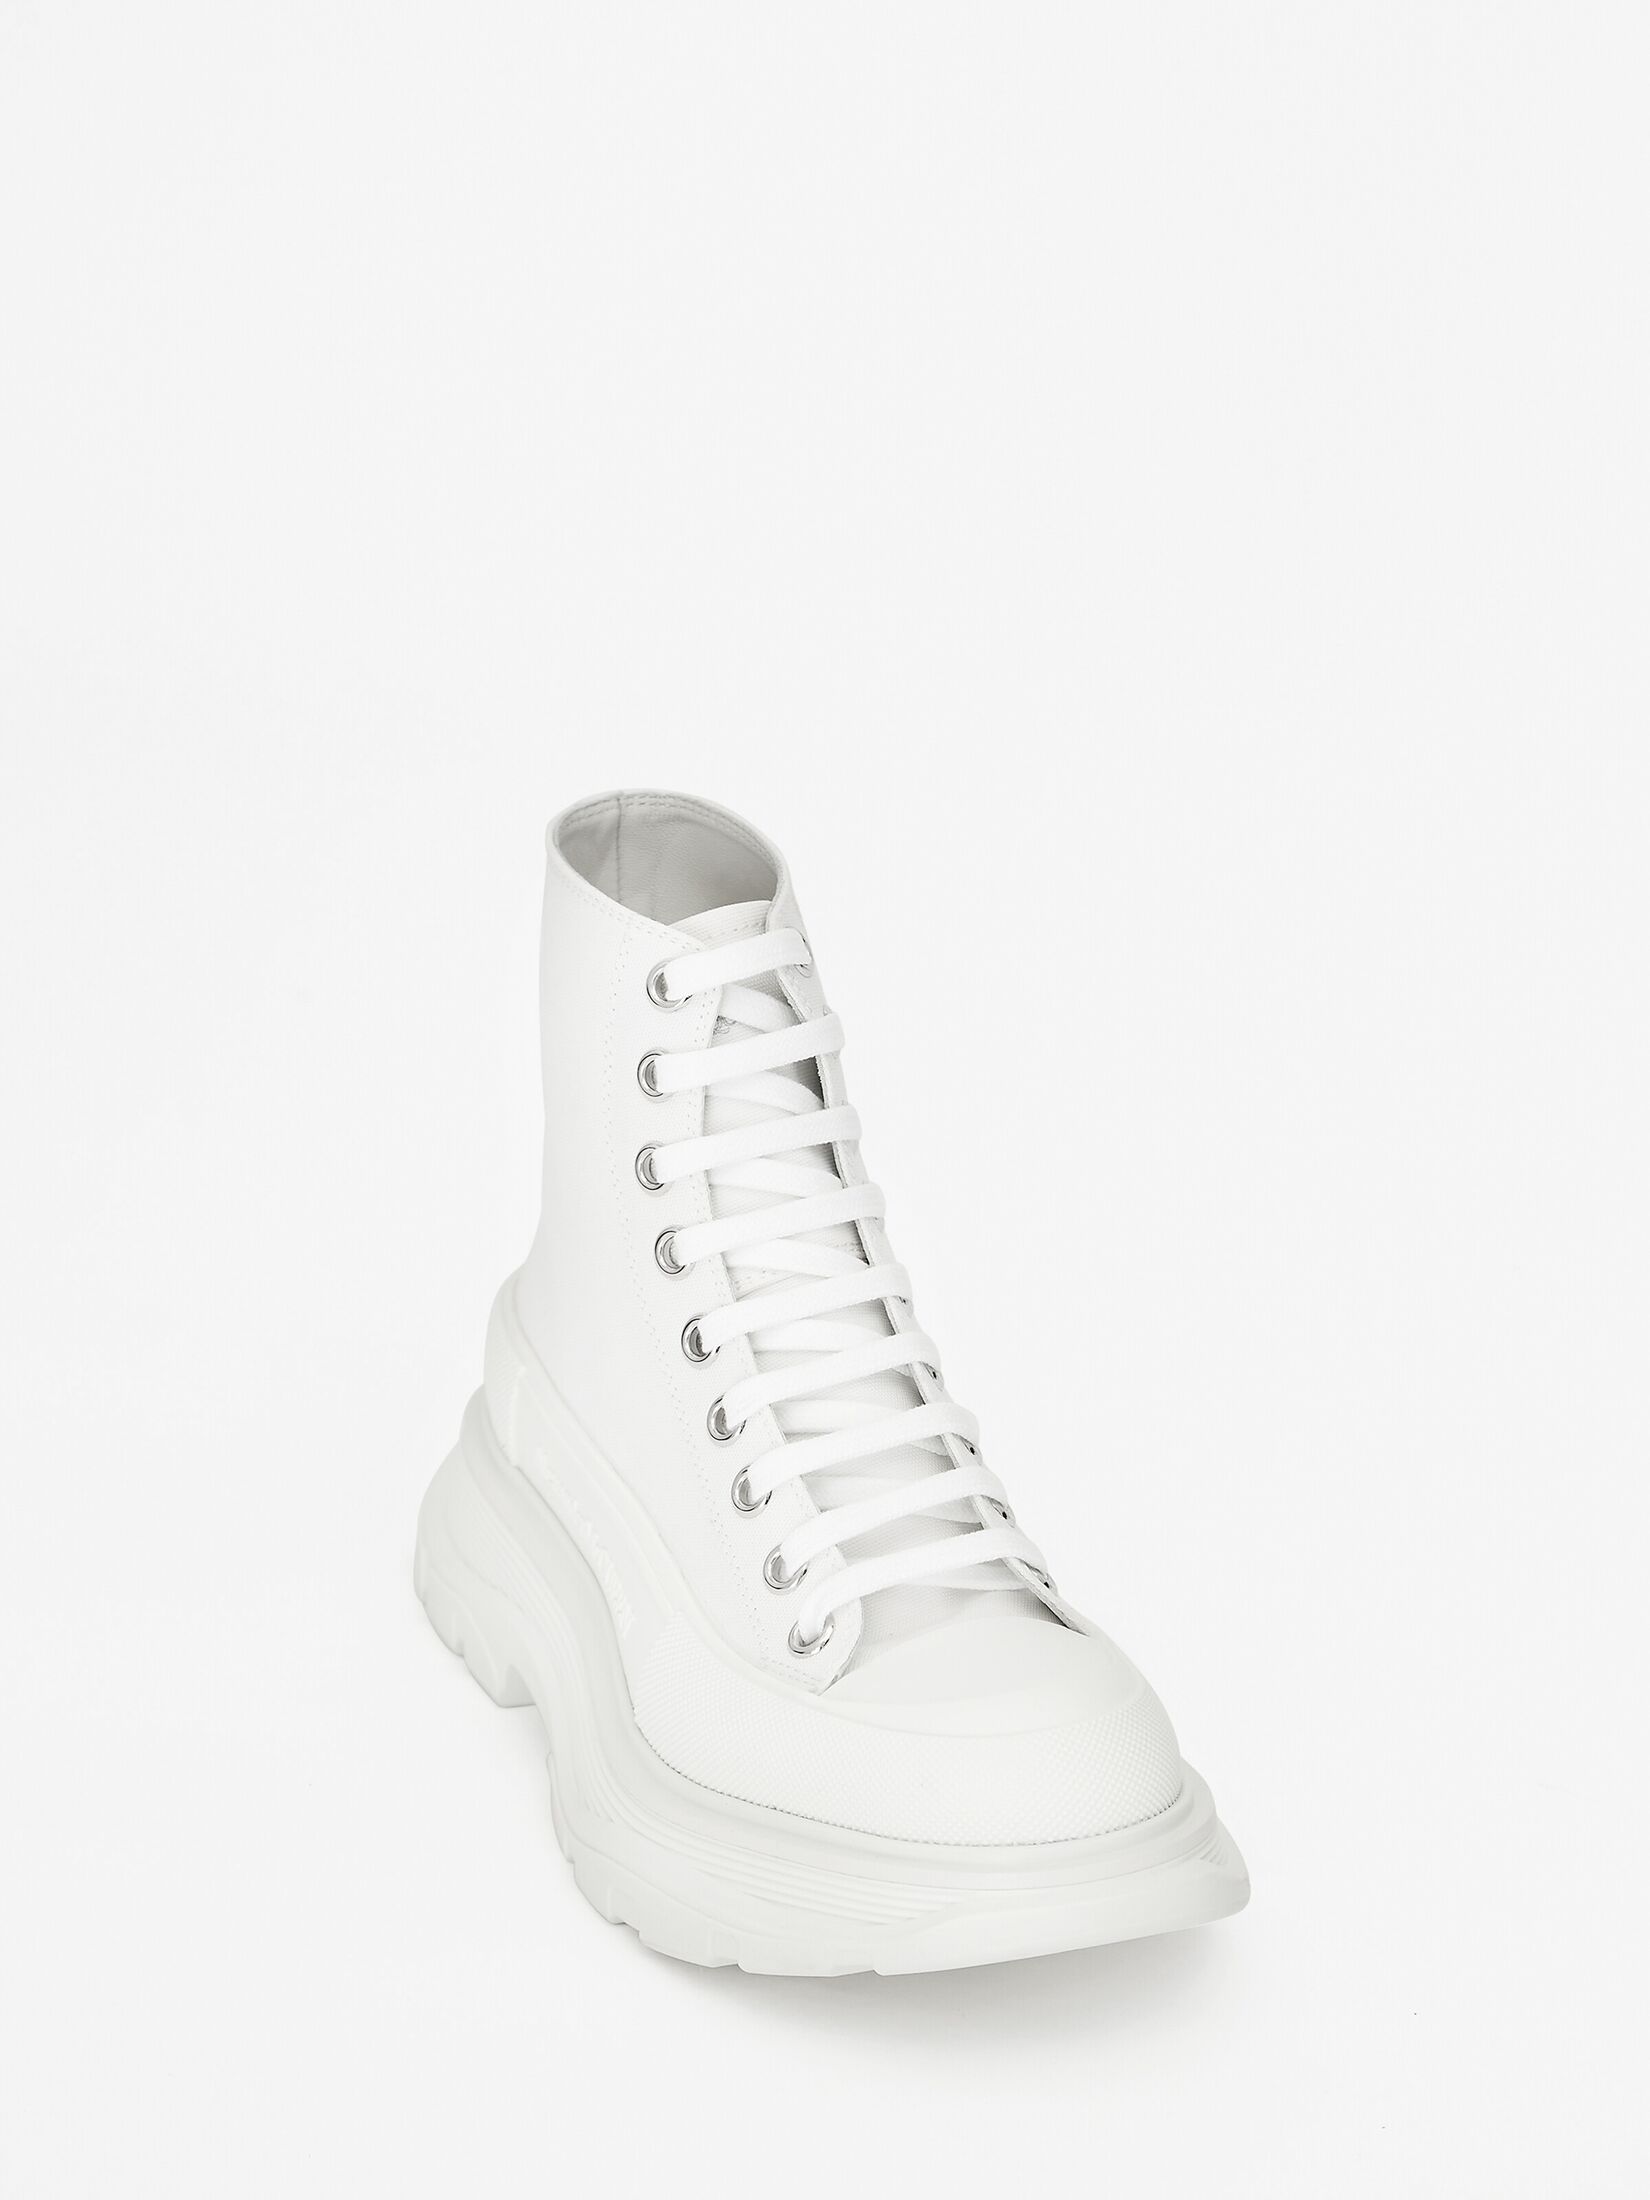 Tread Slick Boot in Black/White | Alexander McQueen US